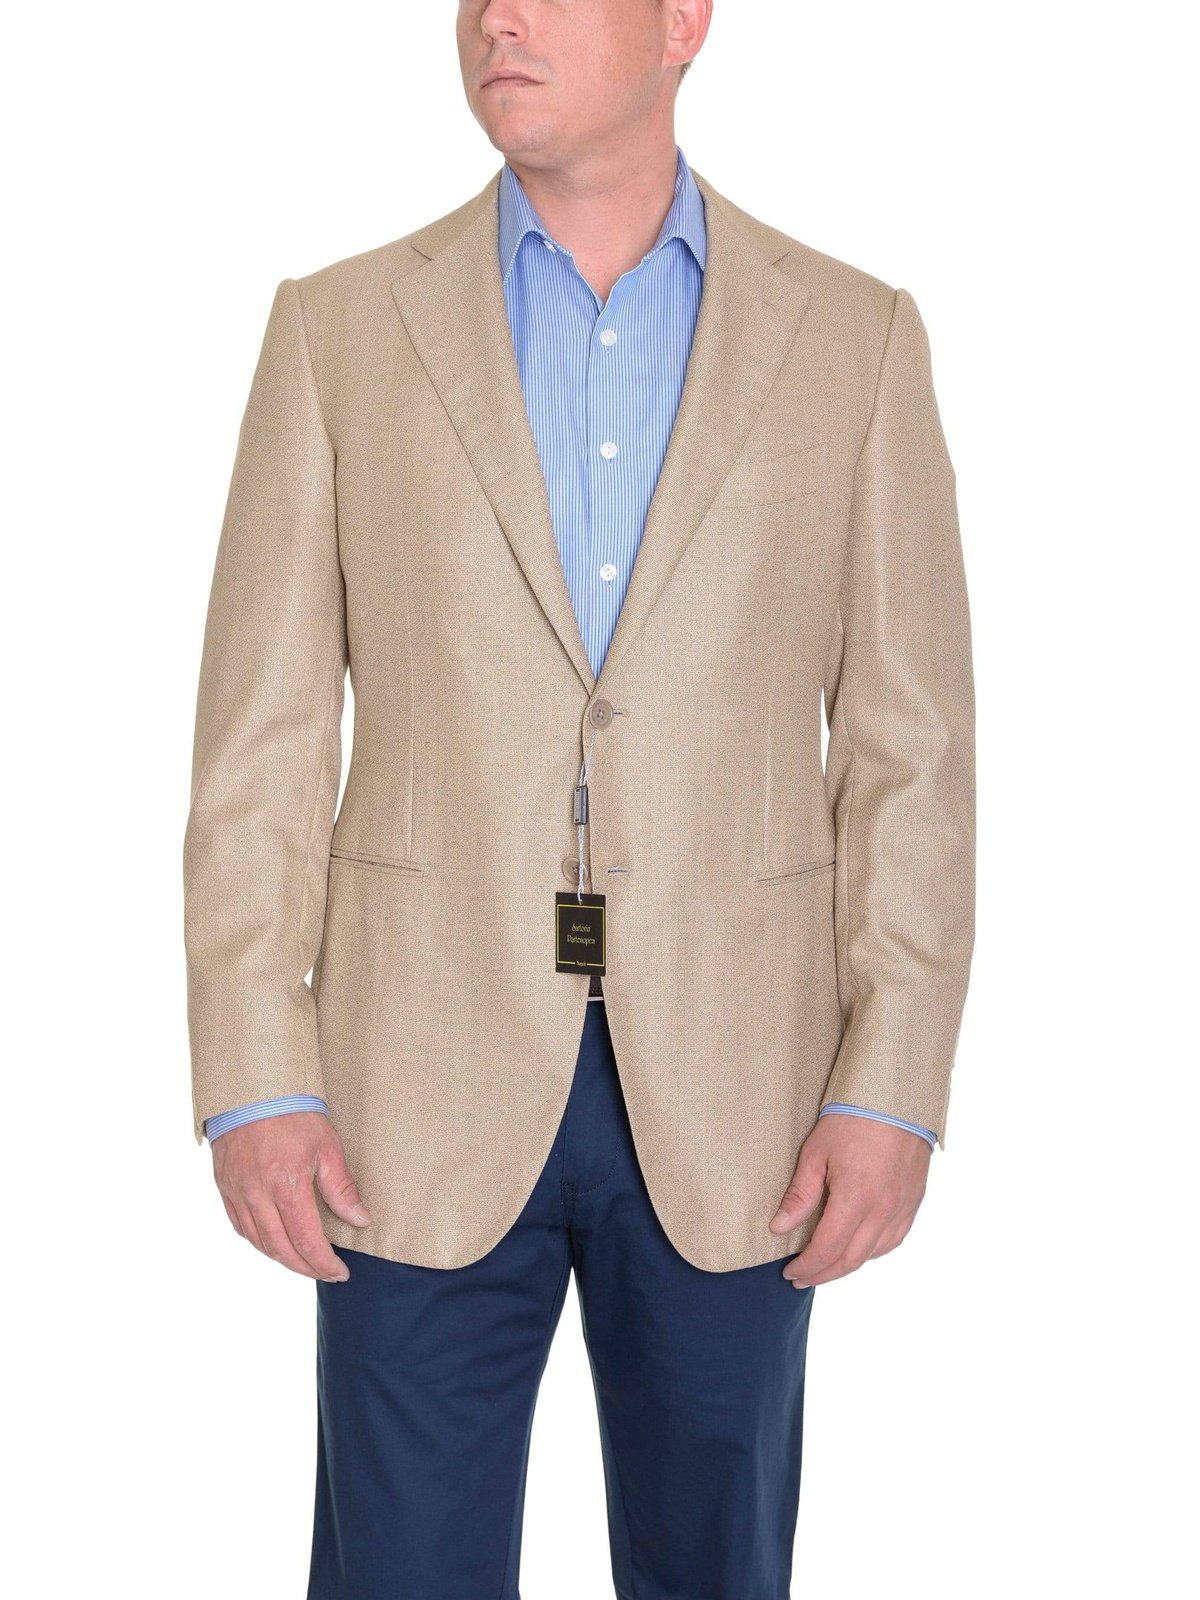 Sartoria Partenopea Italy 40R 50 Tan Beige Wool Silk Men's Blazer Sportcoat - The Suit Depot